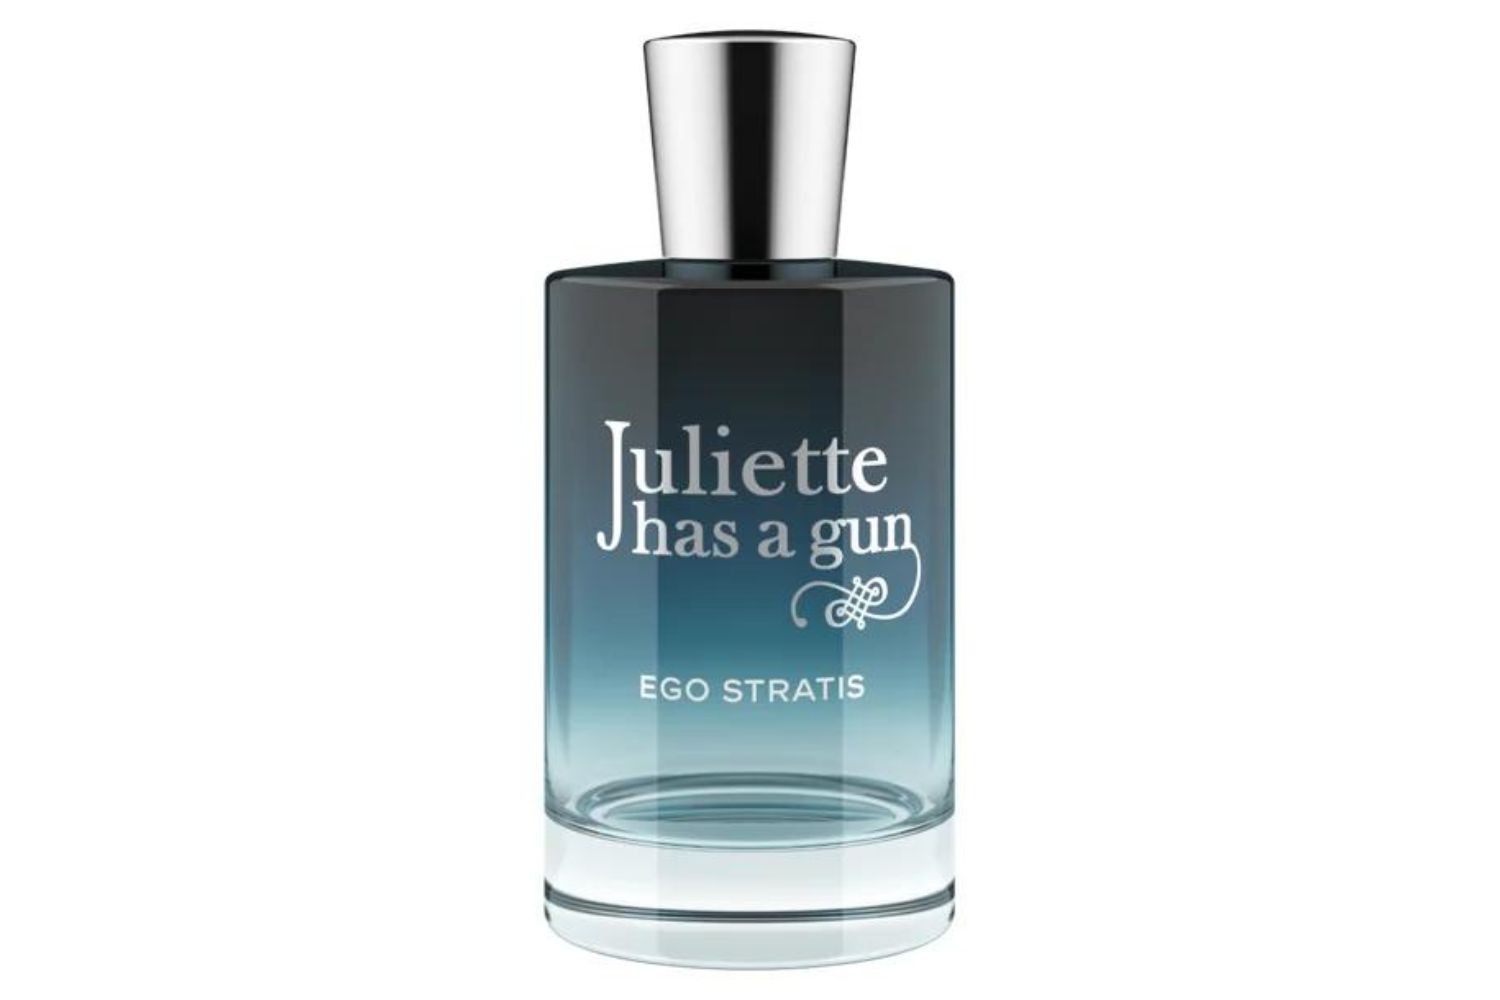 Juliette Has A Gun Ego Stratis EDP, 100ml, $209 at Libertine Parfumerie